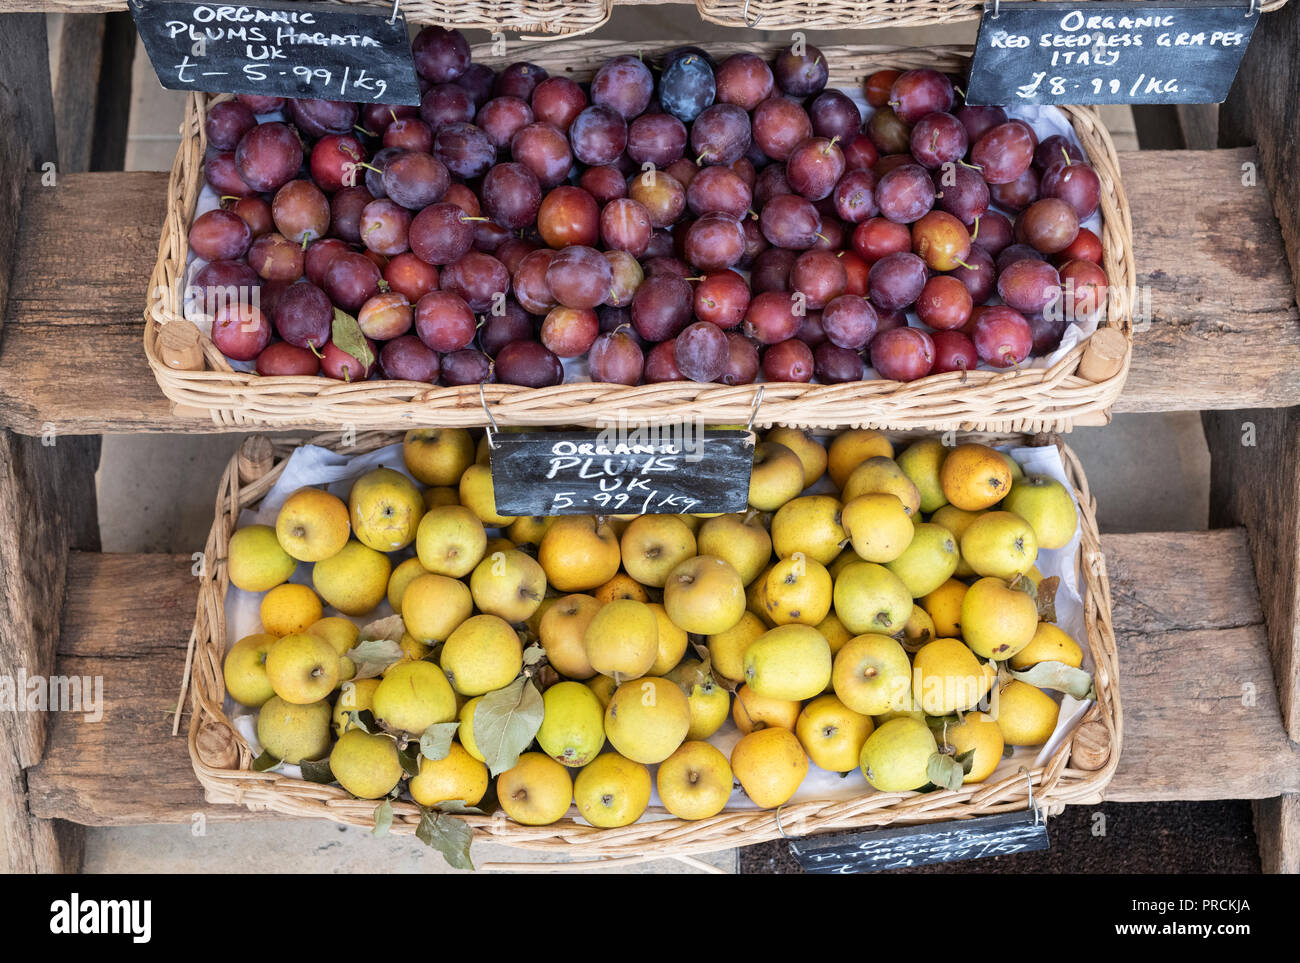 Organic prunes et pommes ananas pitmaston à vendre à Daylesford Organic farm shop festival d'automne. Daylesford, Cotswolds, Gloucestershire, Angleterre Banque D'Images